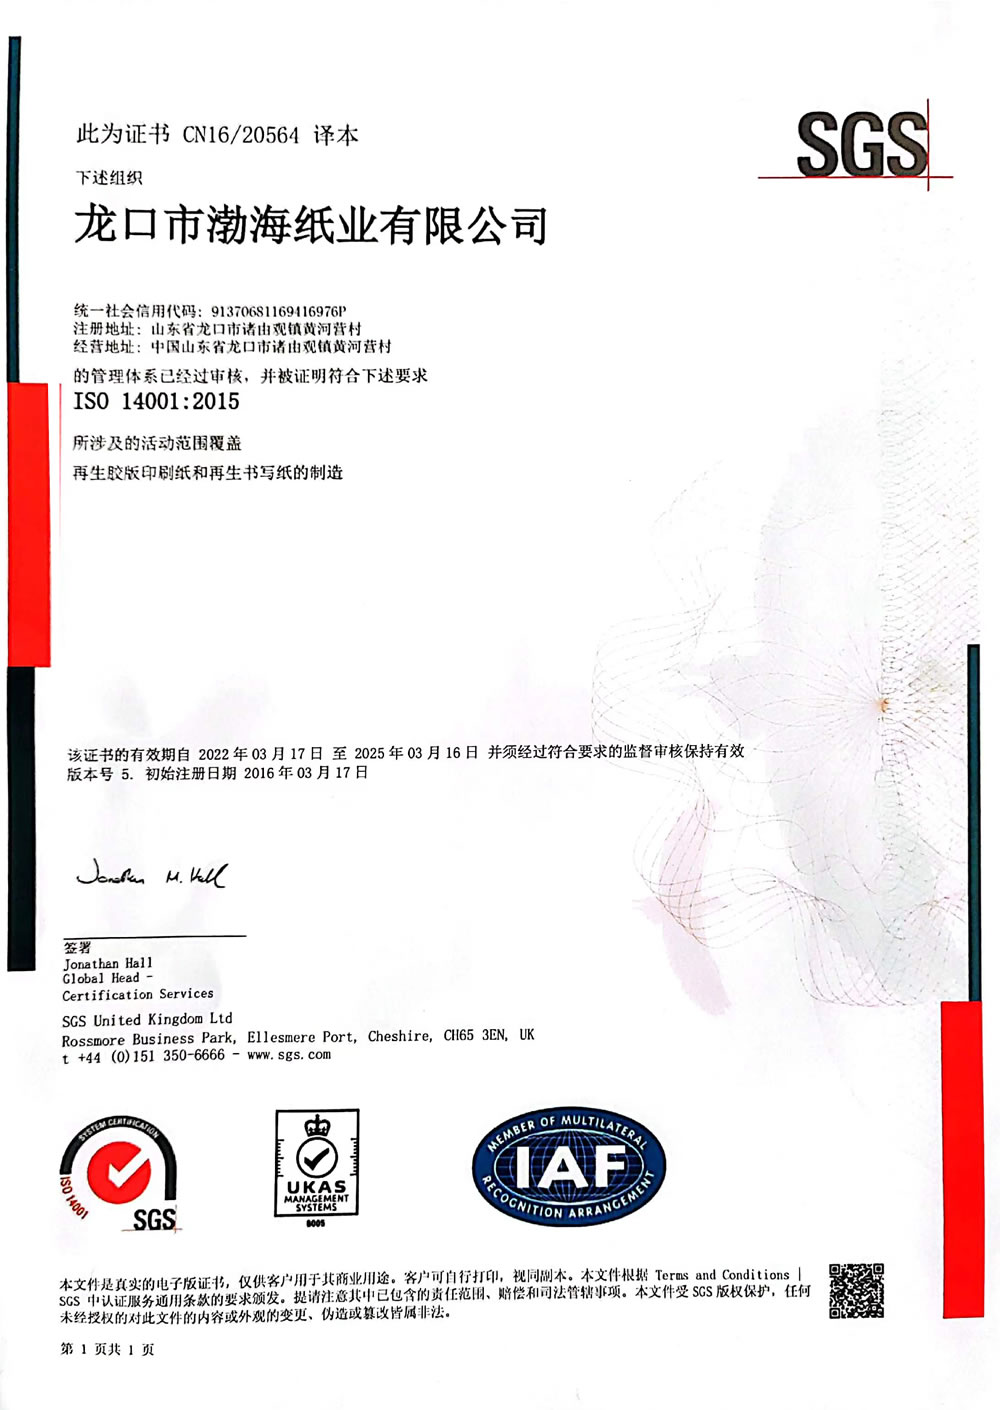 SGS certification certificate